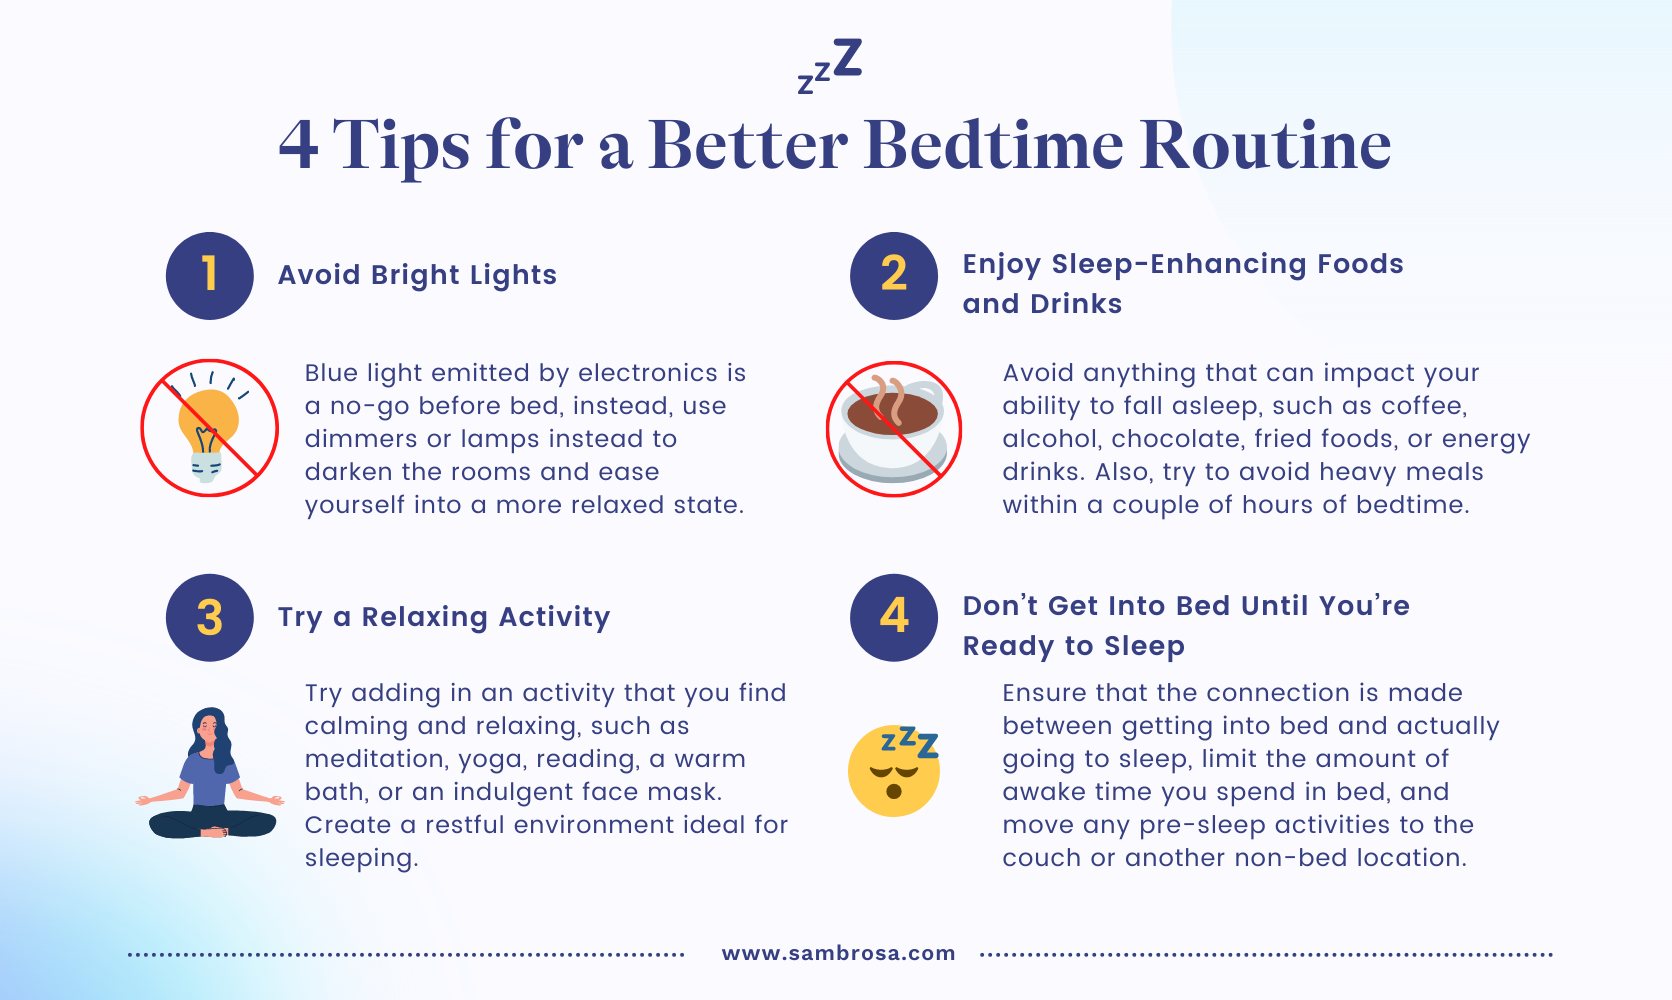 Tips for quality sleep